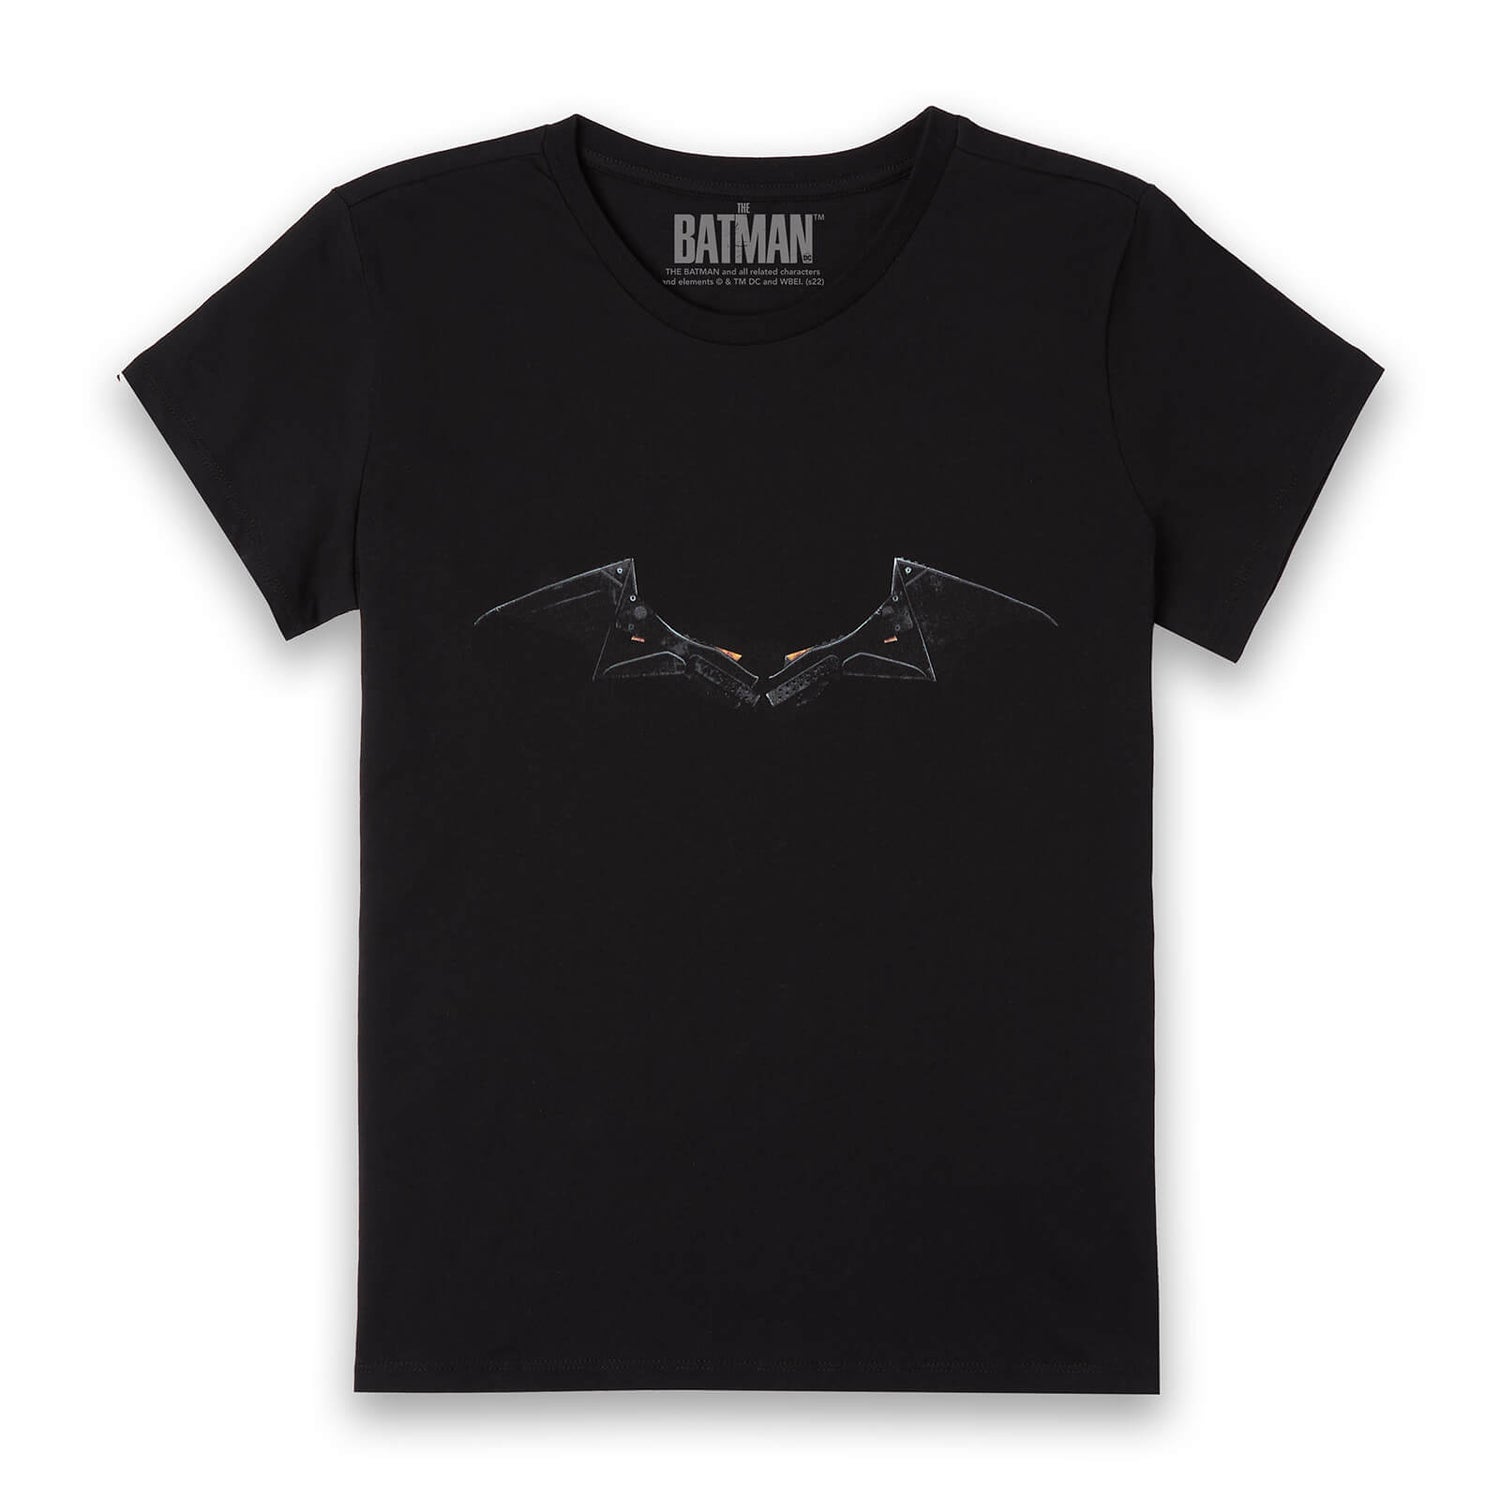 Camiseta The Batman Costume para mujer - Negro